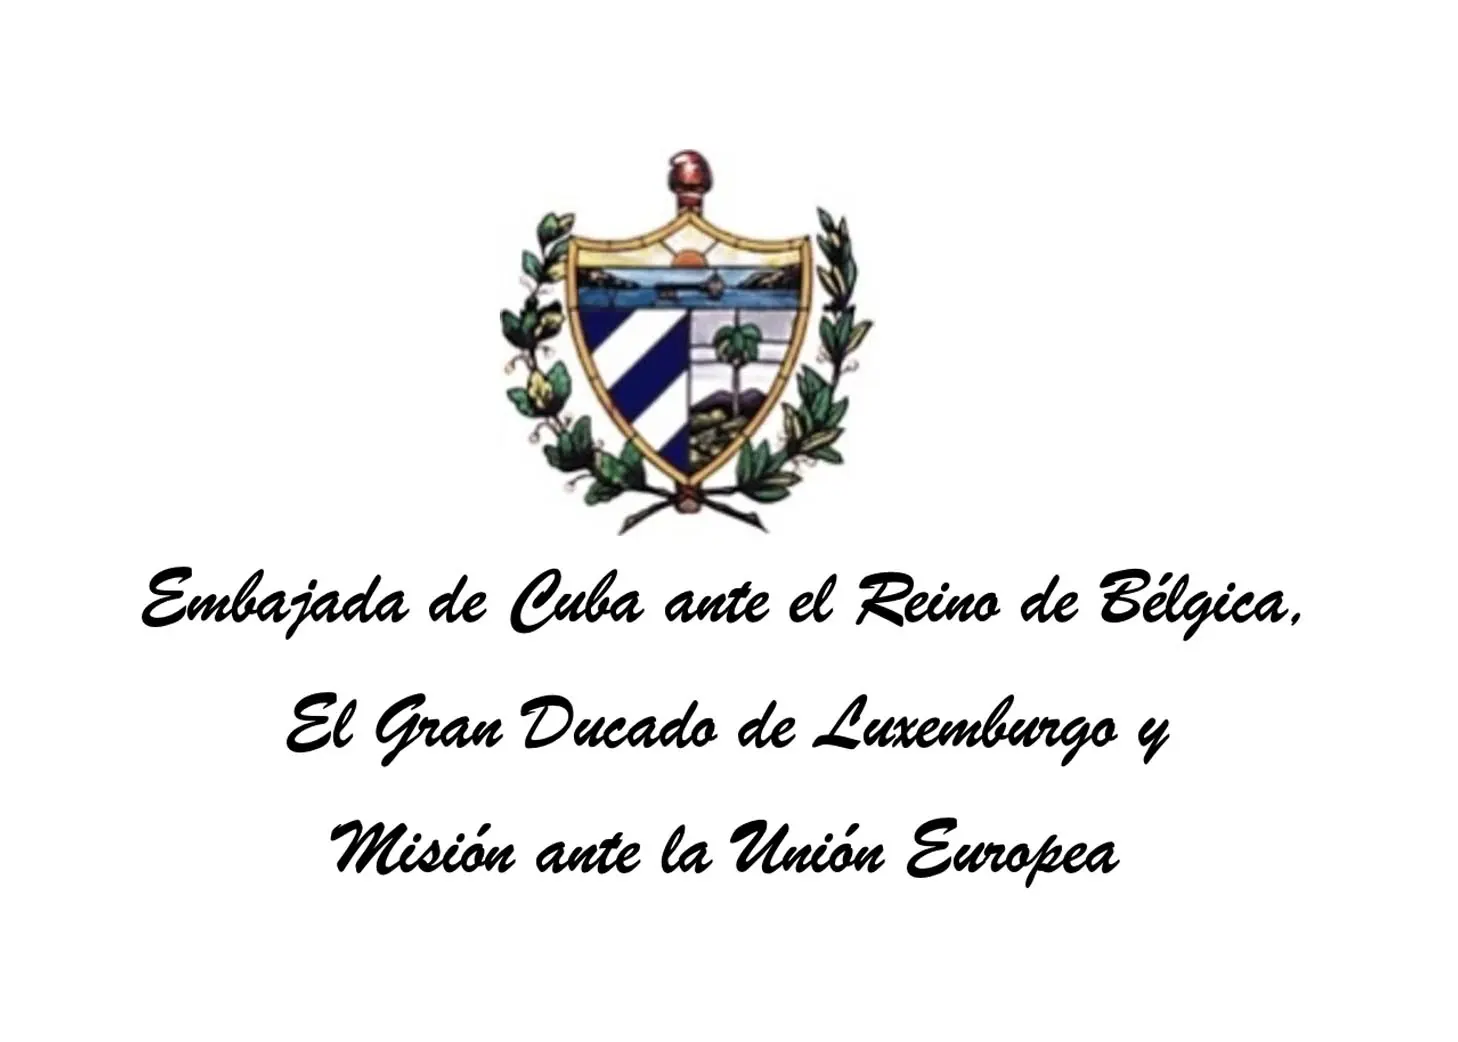 Embassade de Cuba